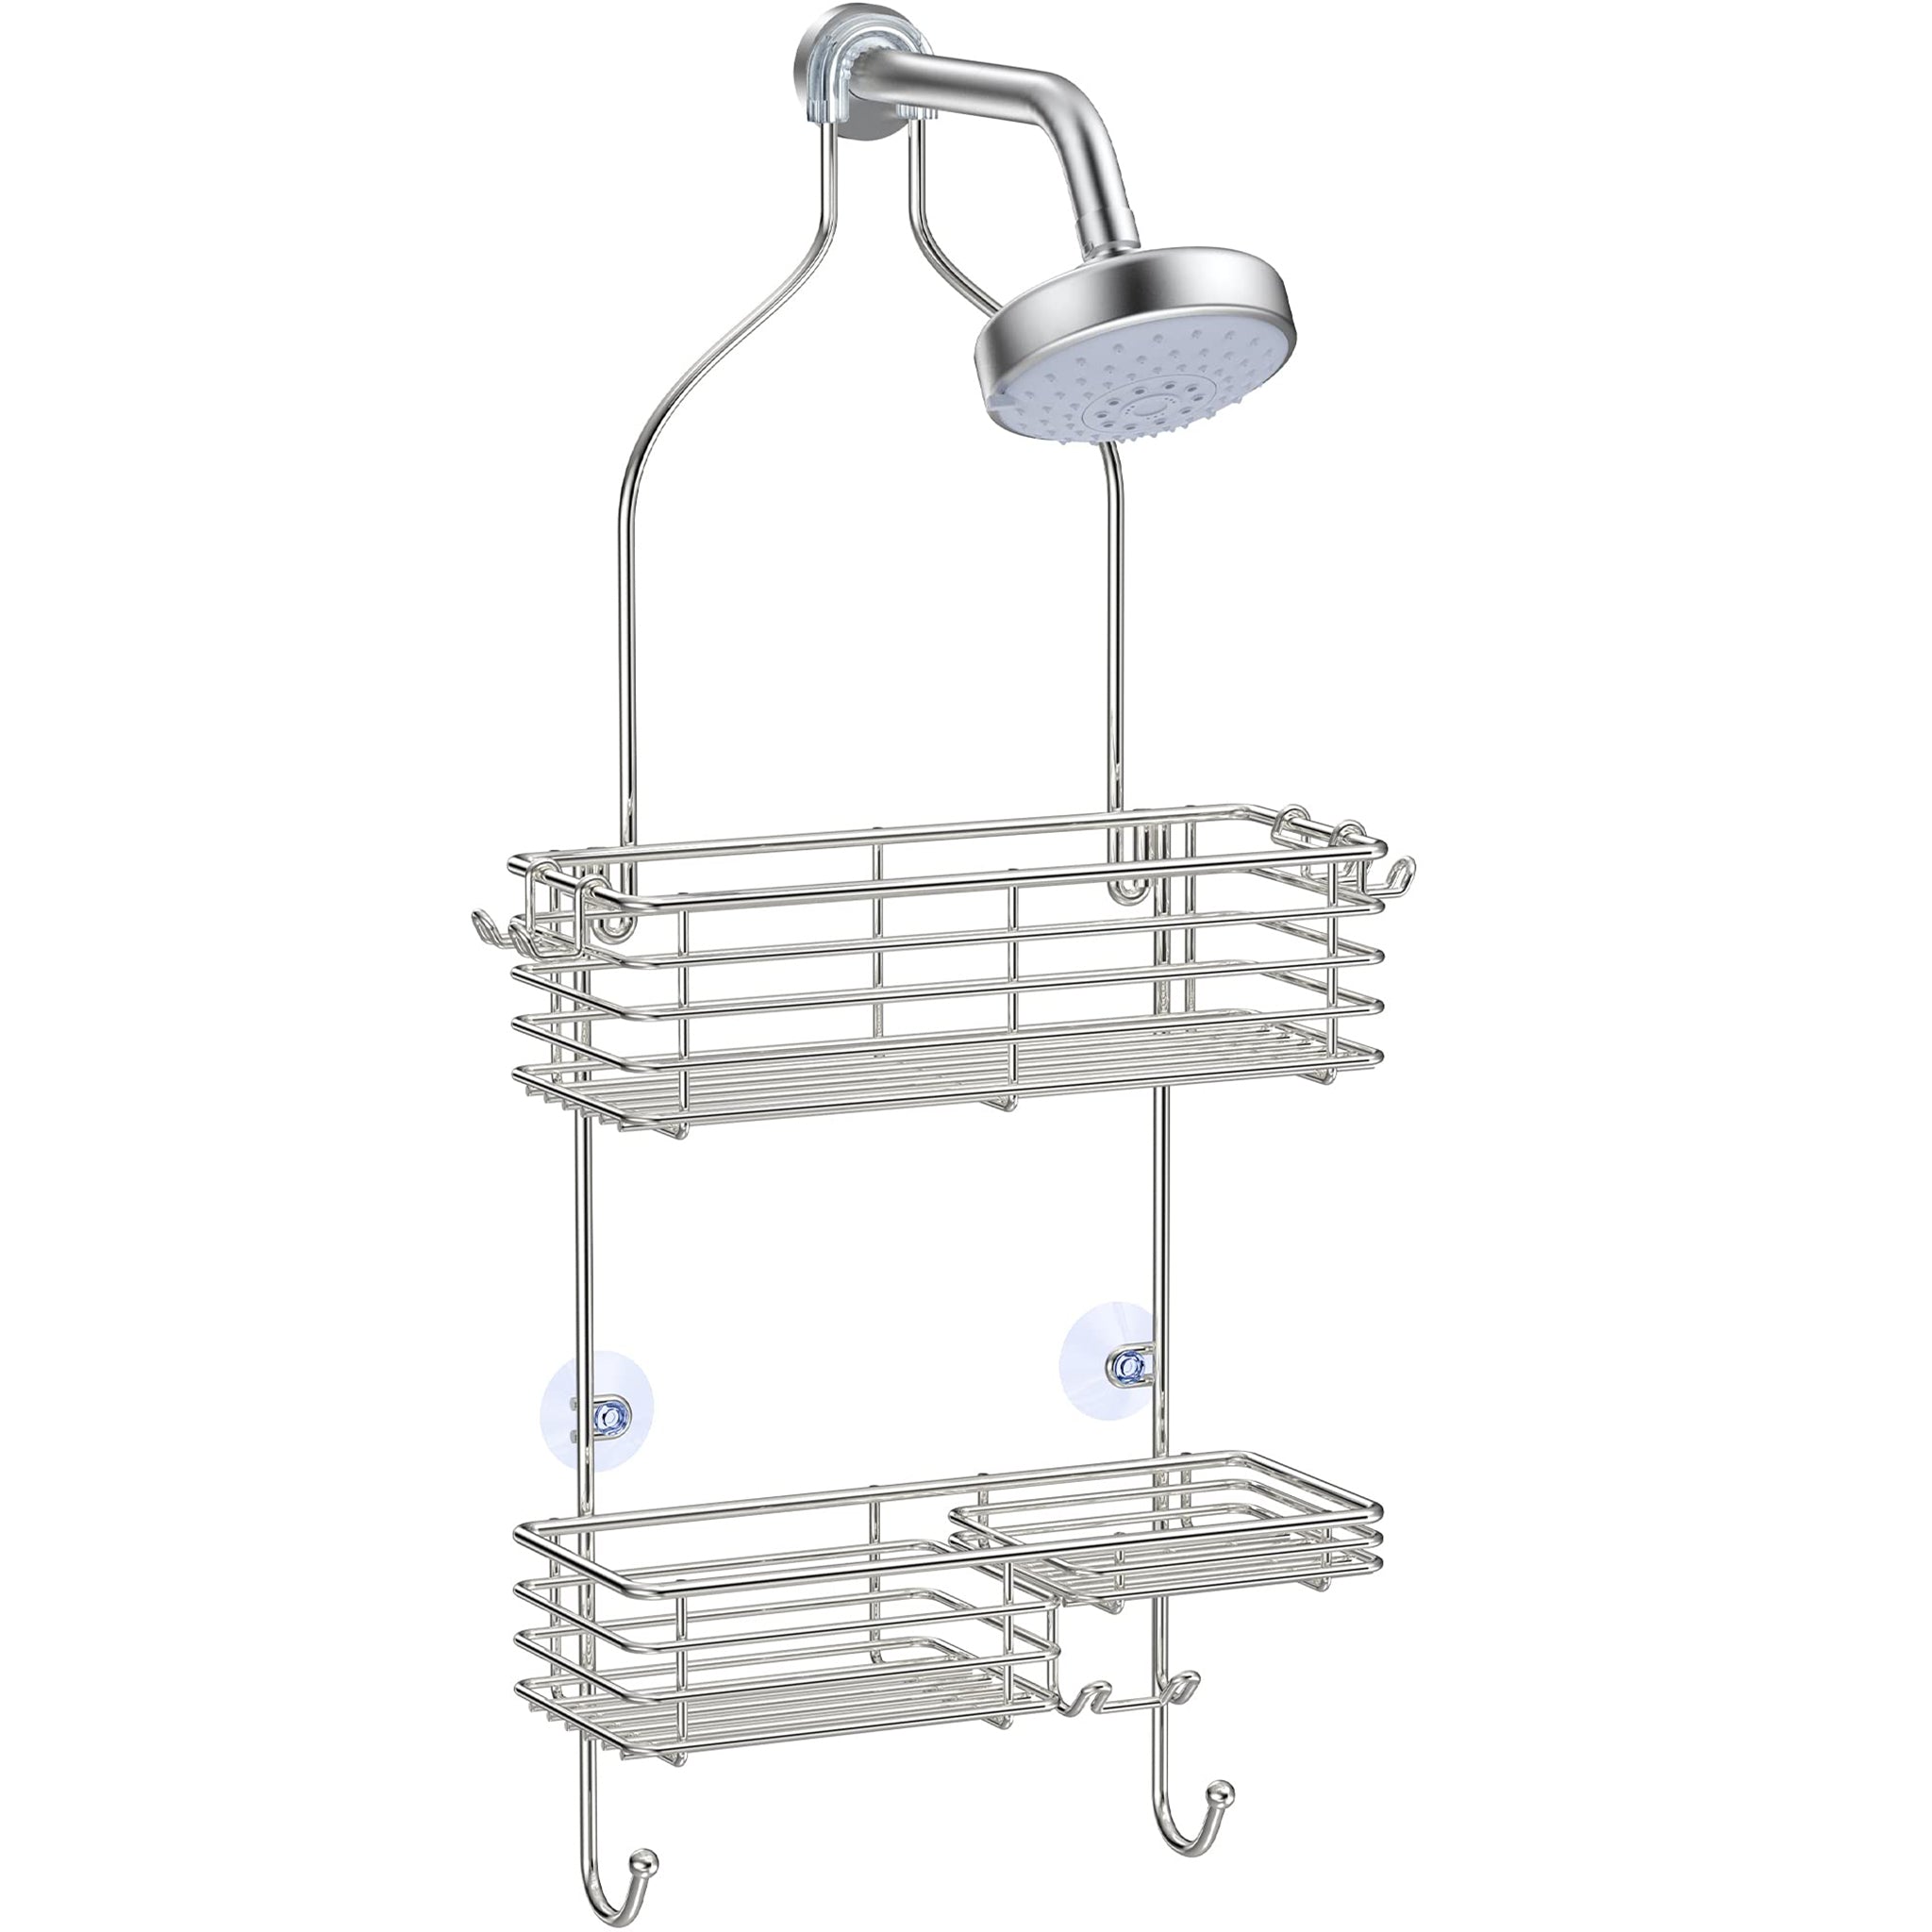 TEKNOTEL Shower Caddy Hanging Bathroom Organizer - Rust Proof Wire Chrome